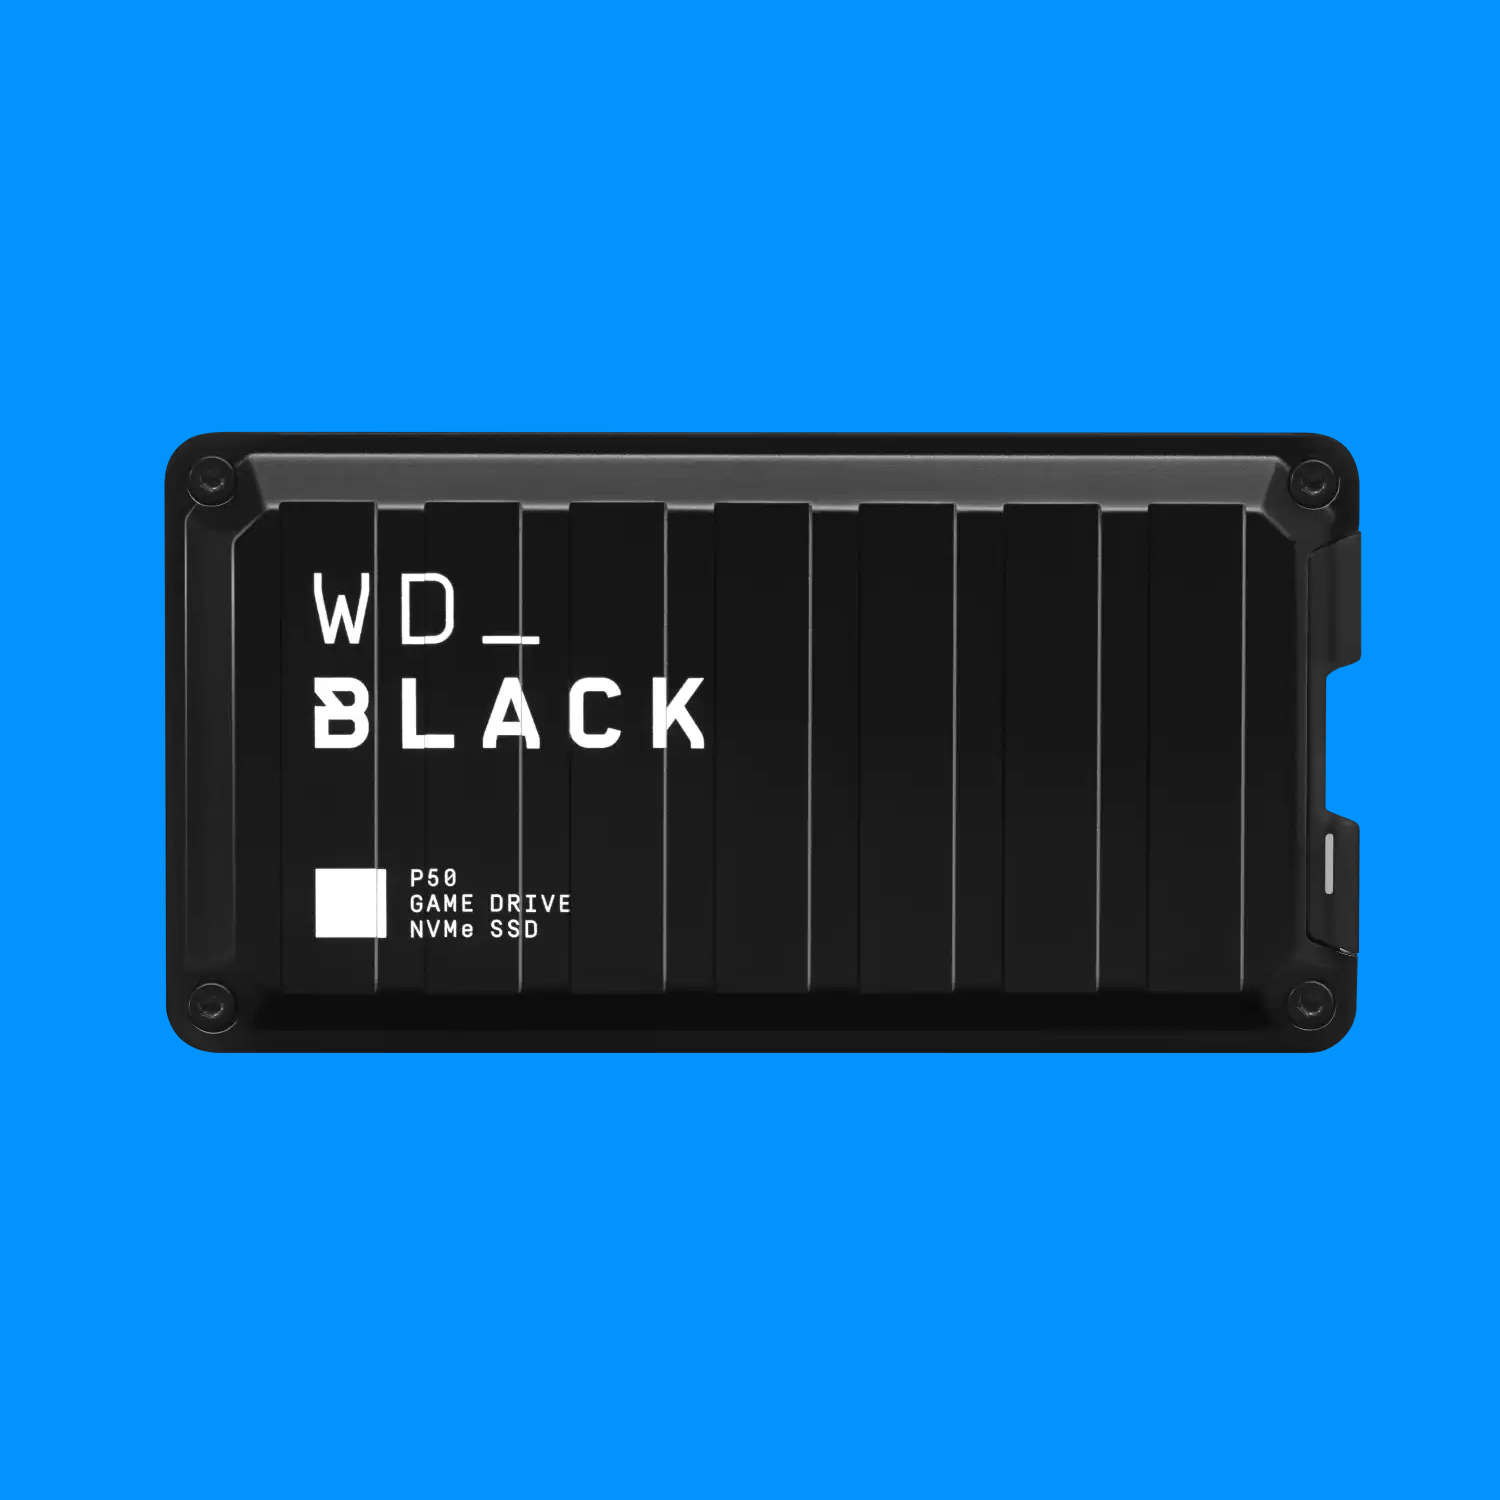 WD_BLACK P50 Game Drive SSD...